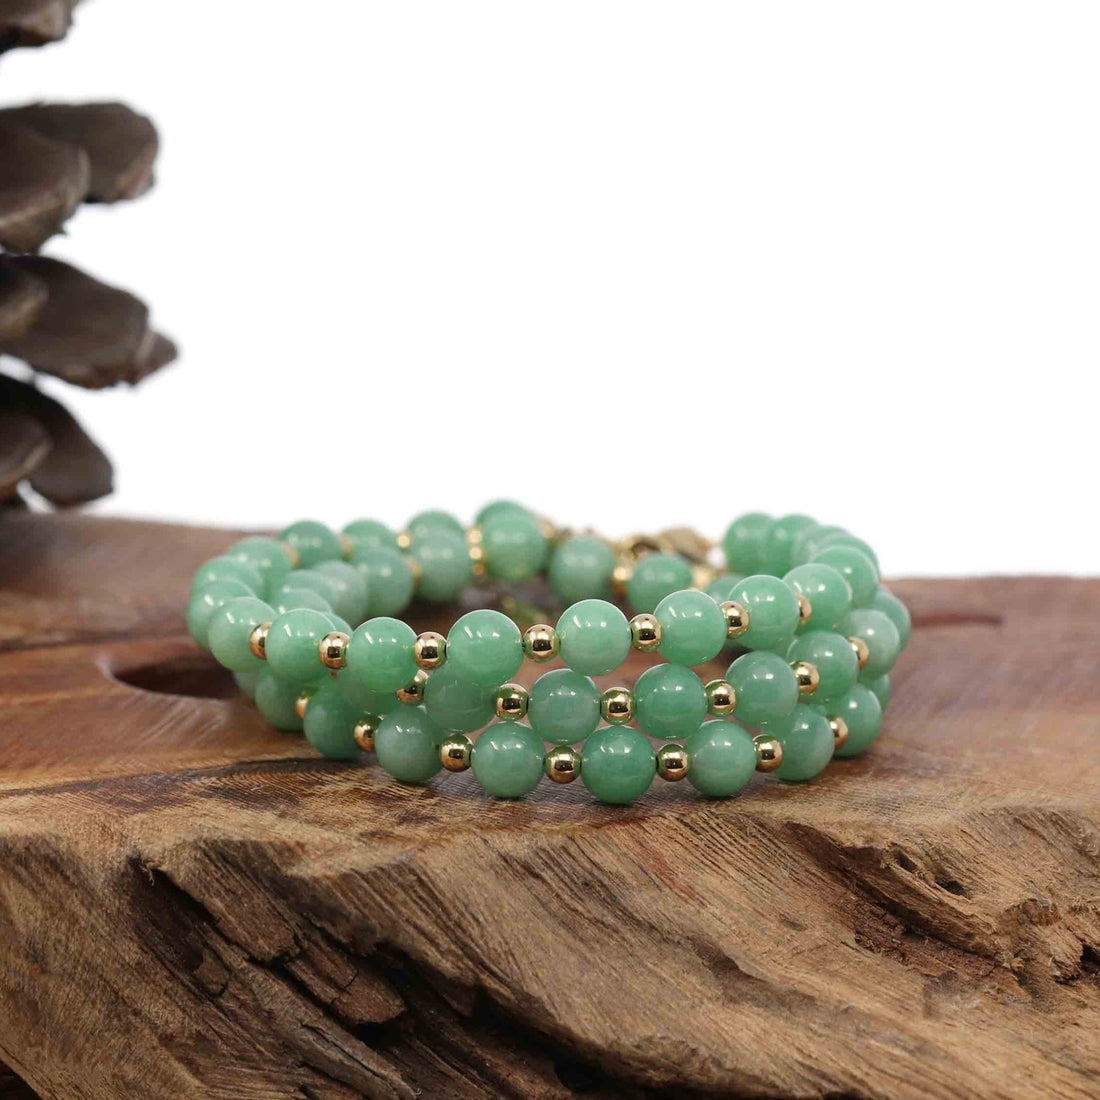 Baikalla Jewelry jade beads bracelet 6.5 inches Baikalla Genuine Green Jadeite Jade Round Beads Bracelet With 18K Yellow Gold Clasp and Gold Beads ( 6 mm )